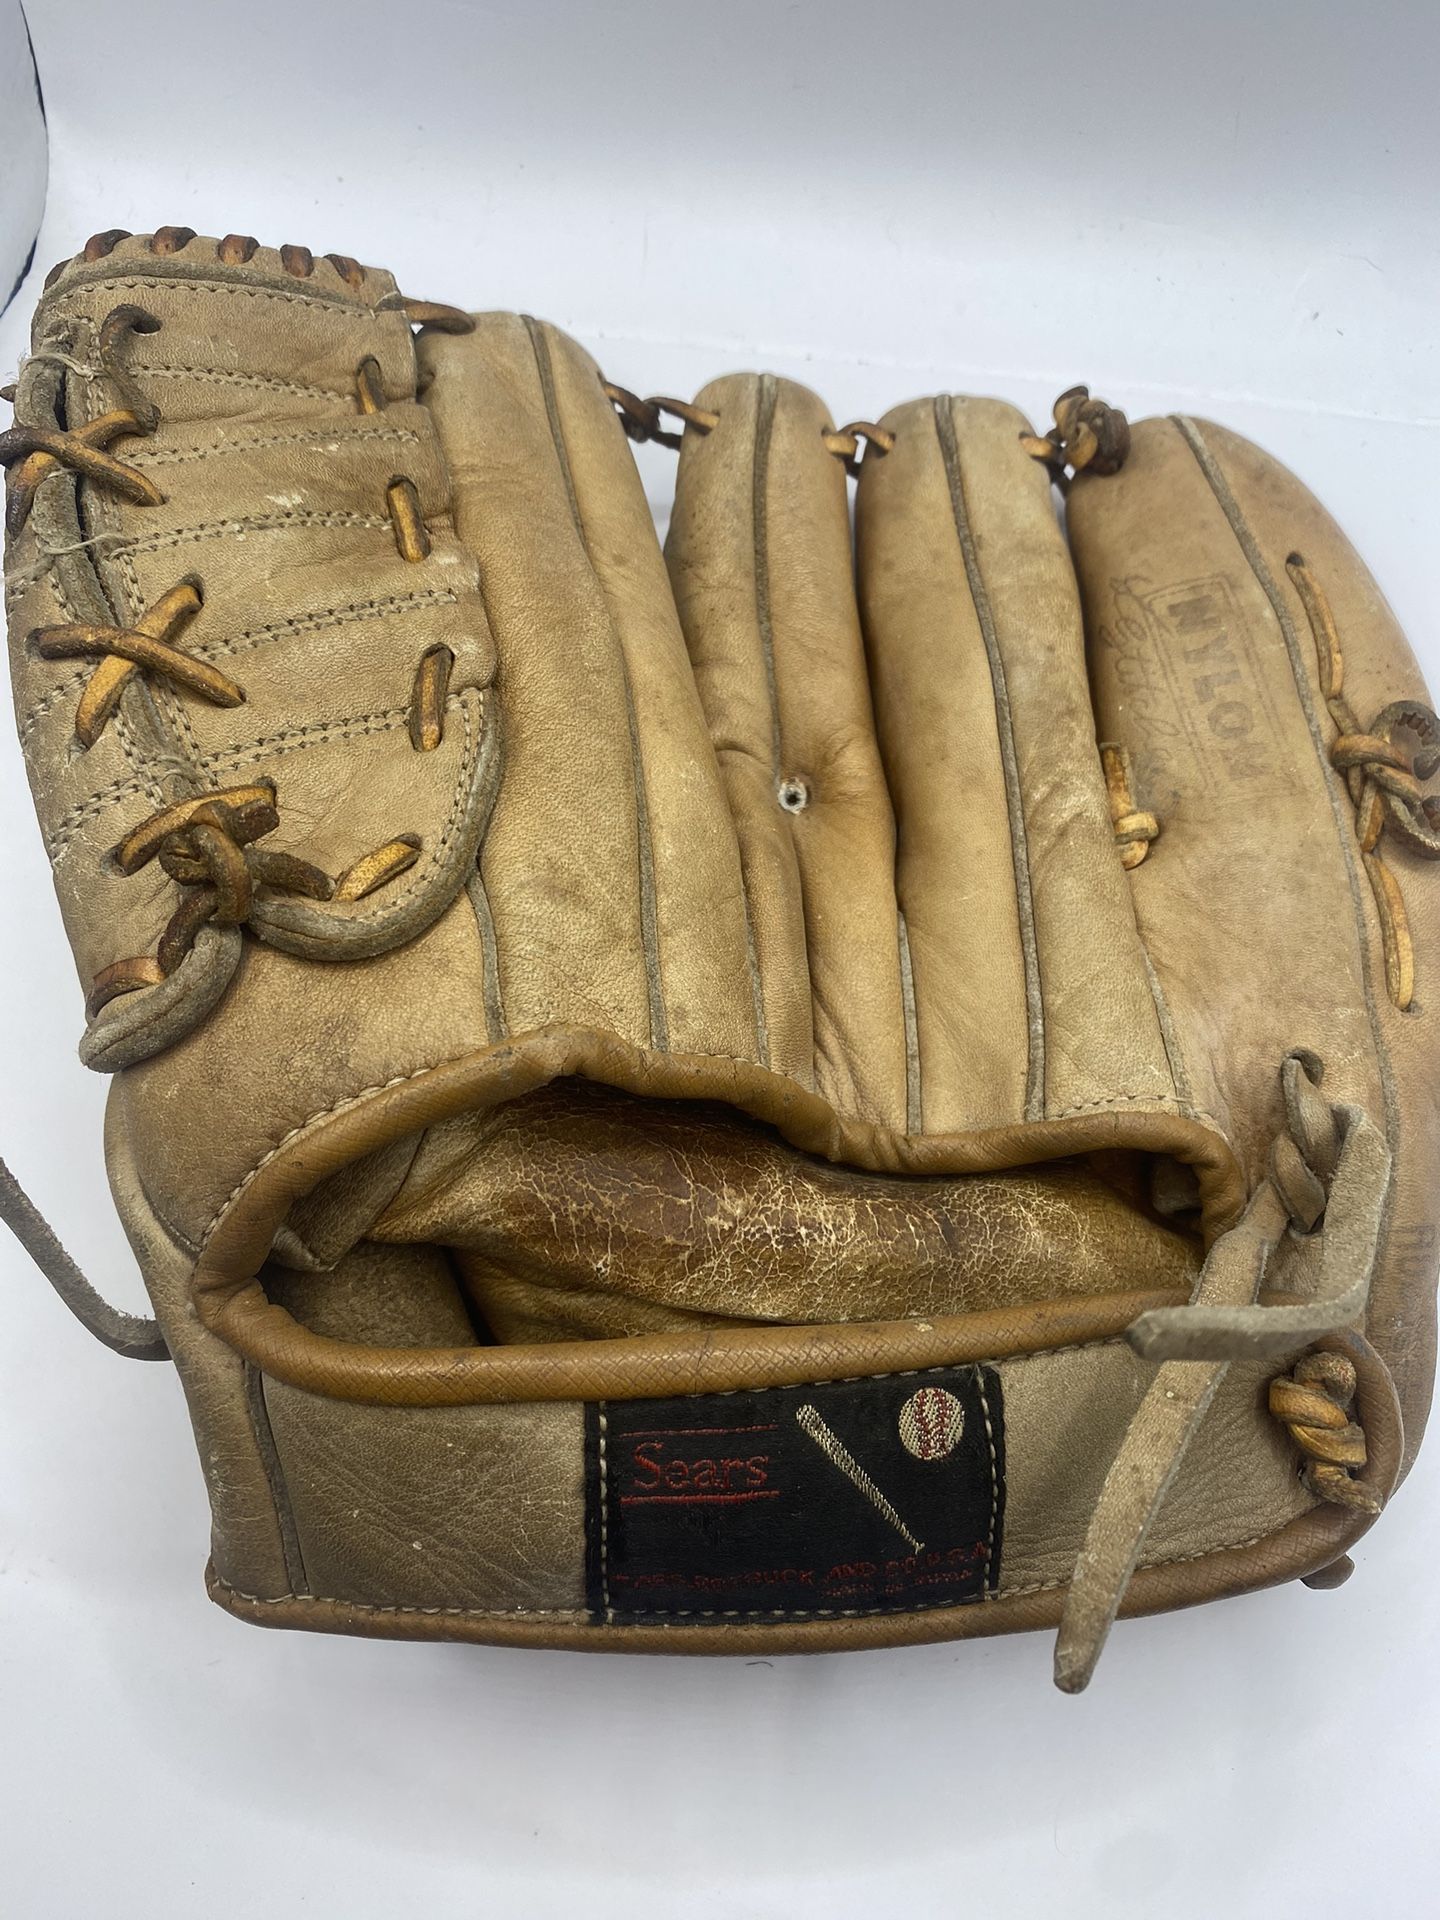 Vintage Sears Roebuck And Co. Baseball Glove - Model 1629 - Left Handed Thrower